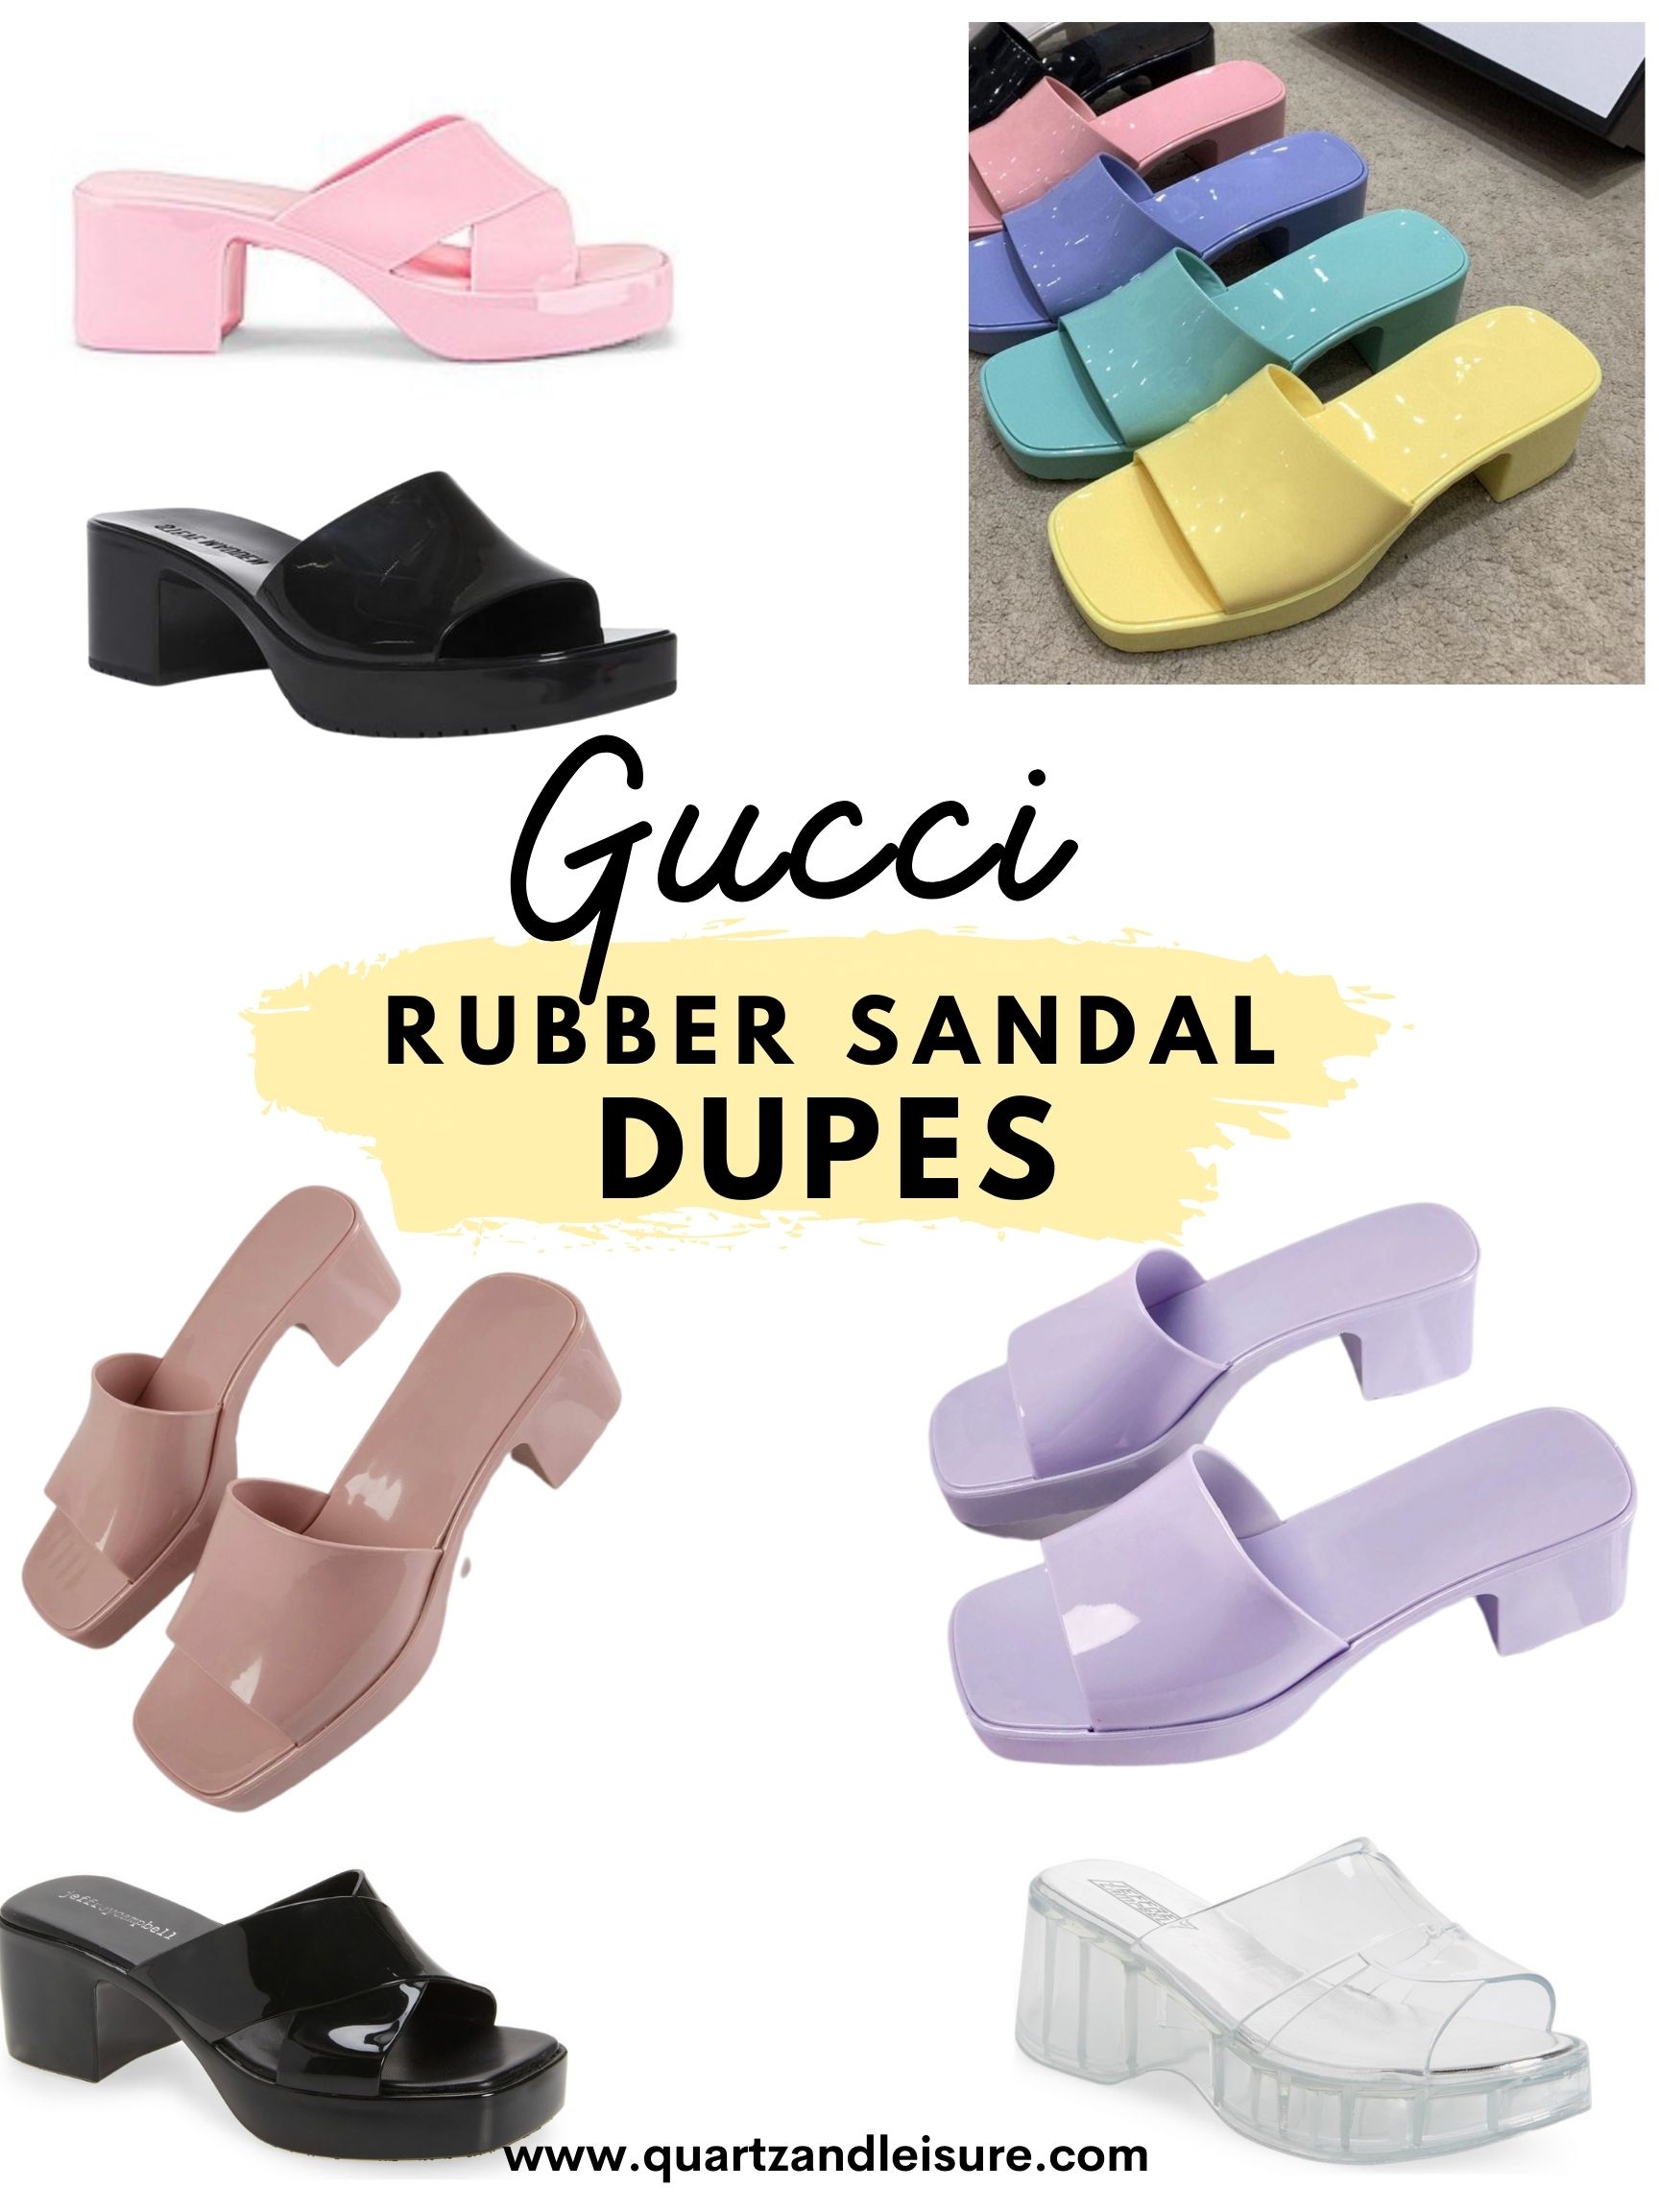 Gucci Rubber Sandal Dupes